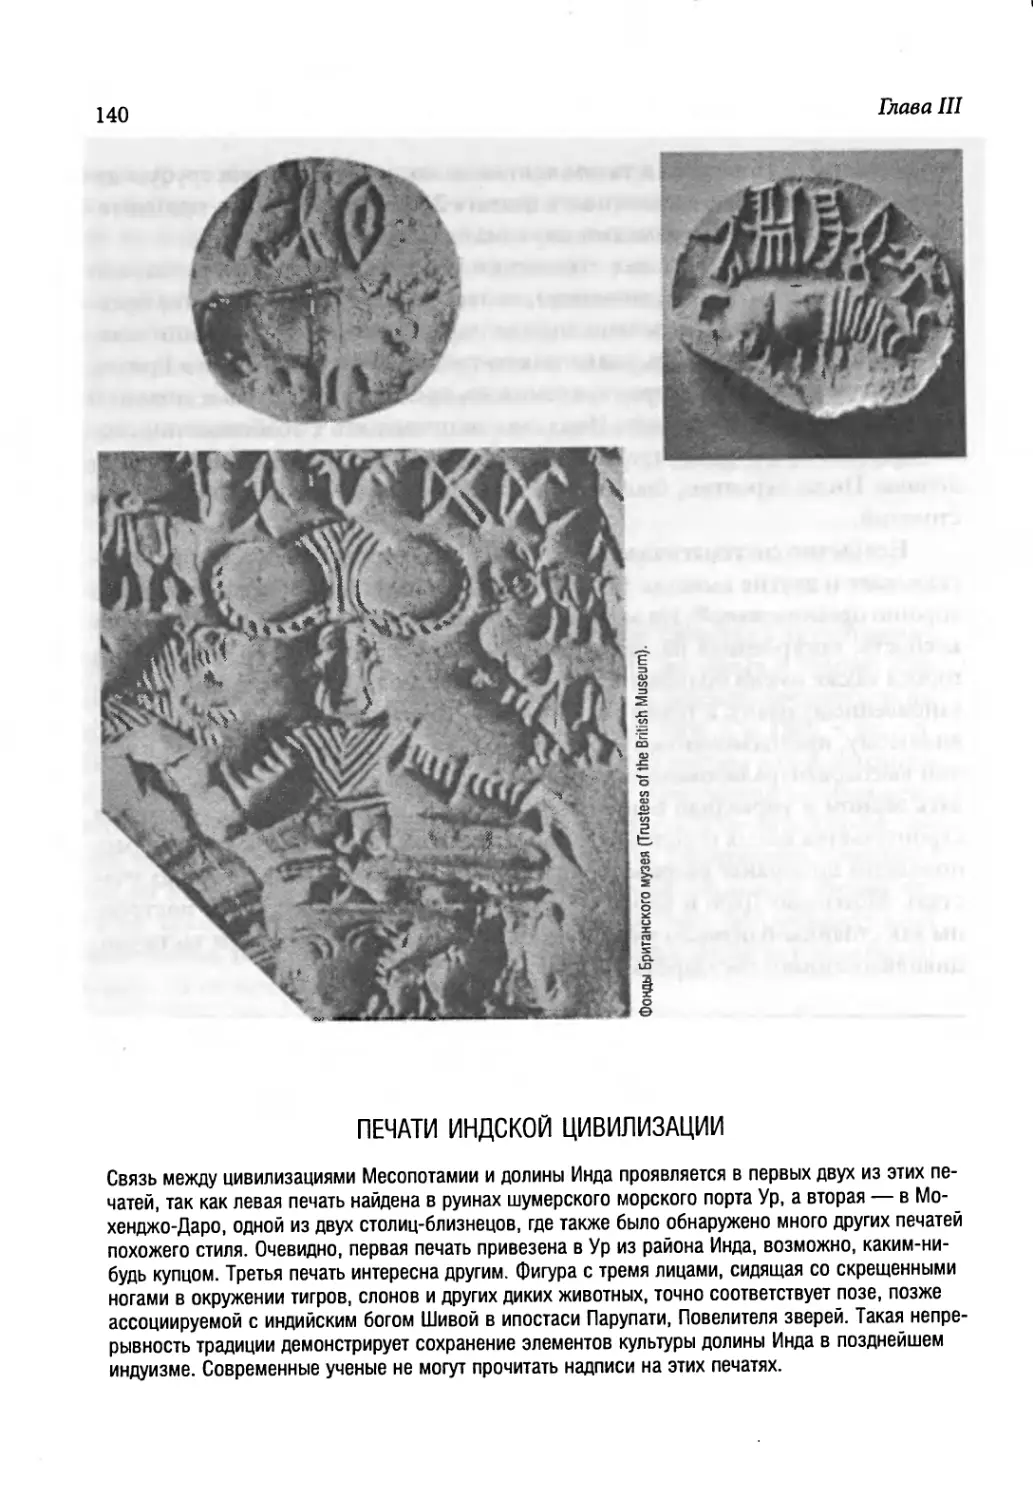 Печати индской цивилизации [140]